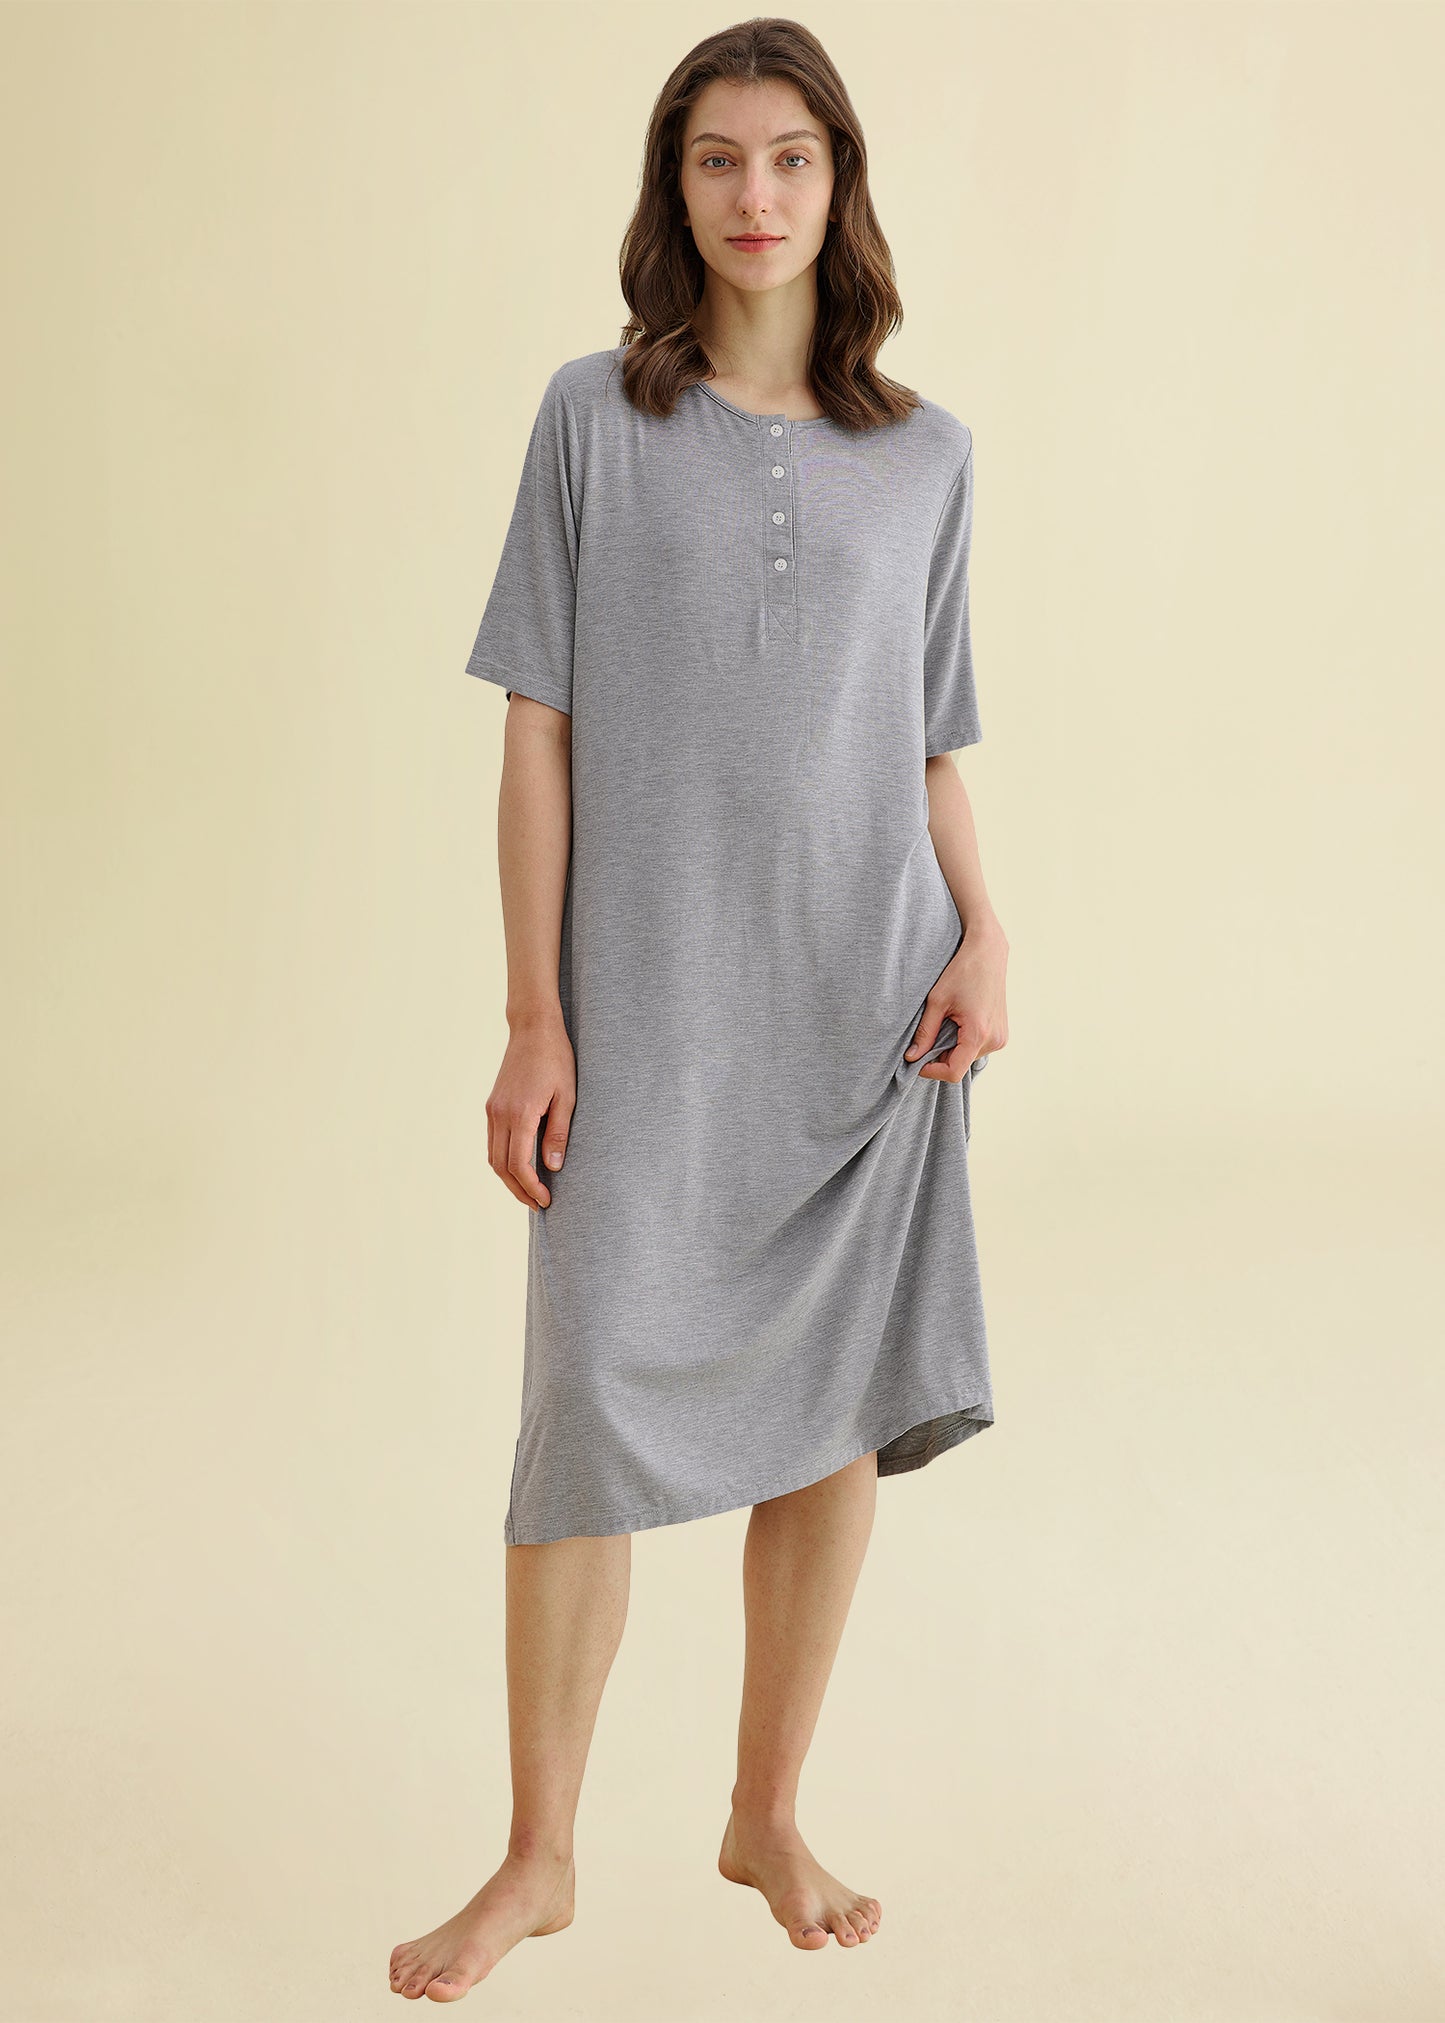 Women's Long Sleep Shirt Henley Nightshirt with Pockets